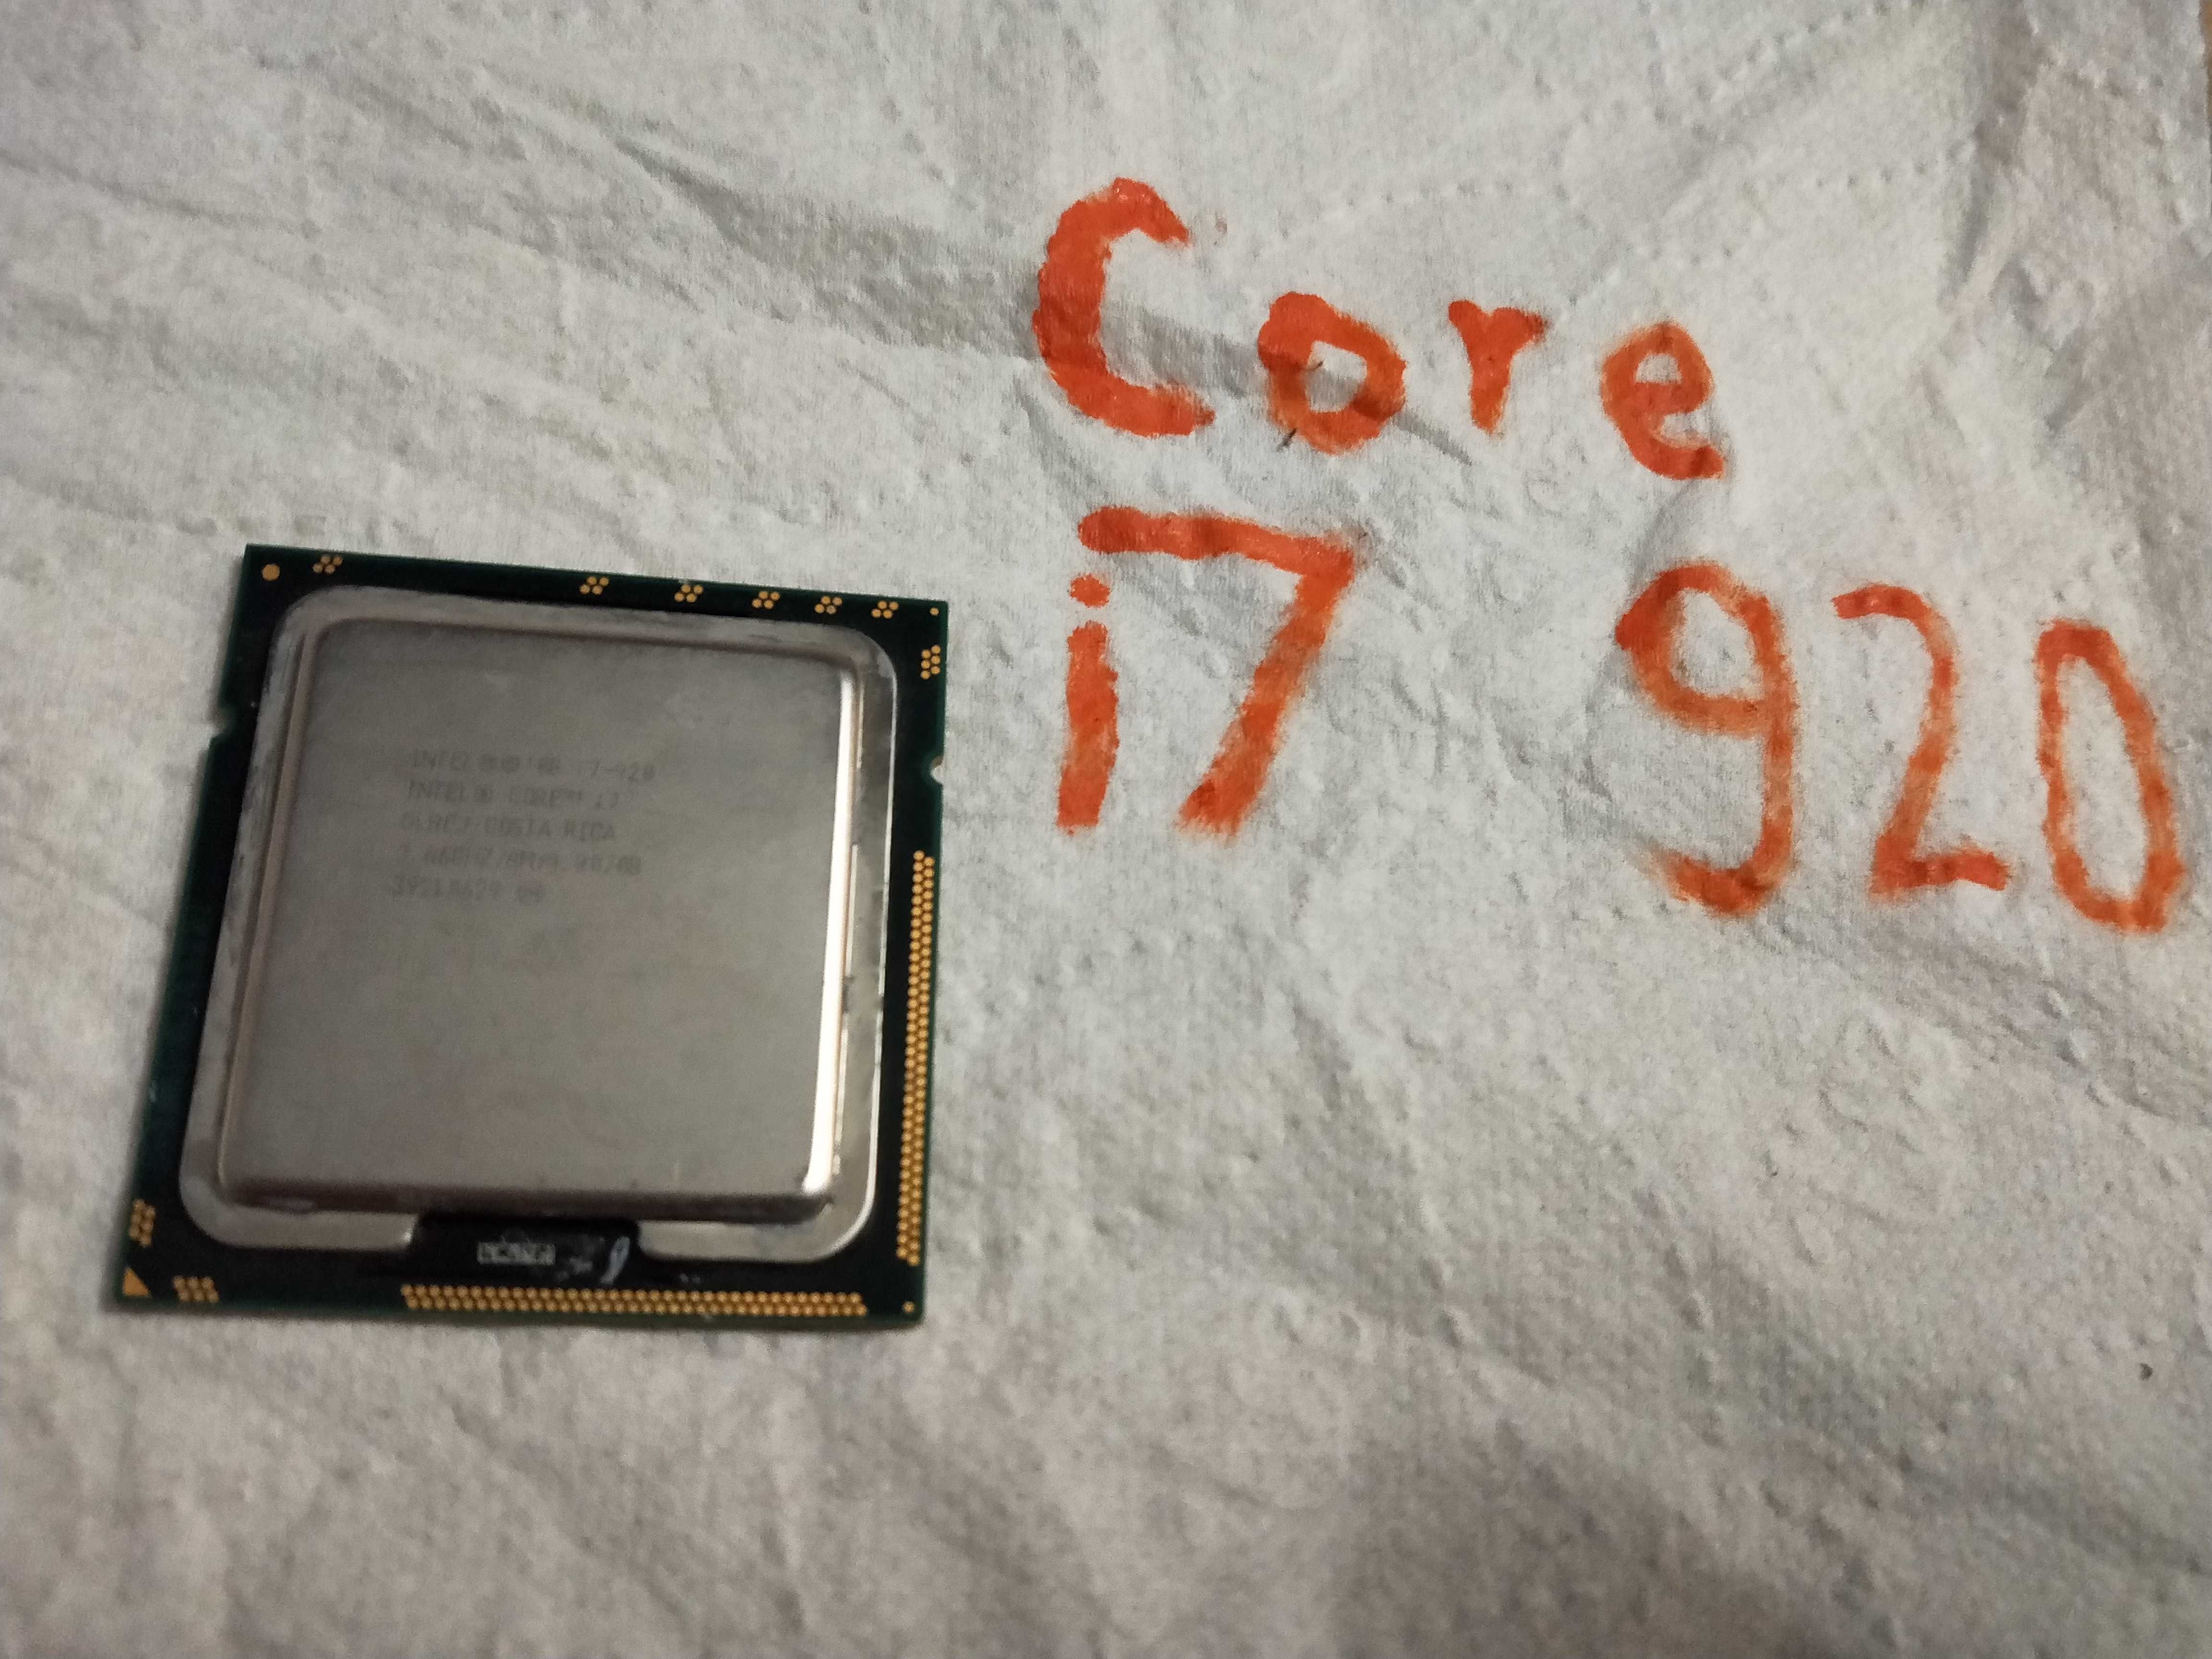 Intel Core i7 920